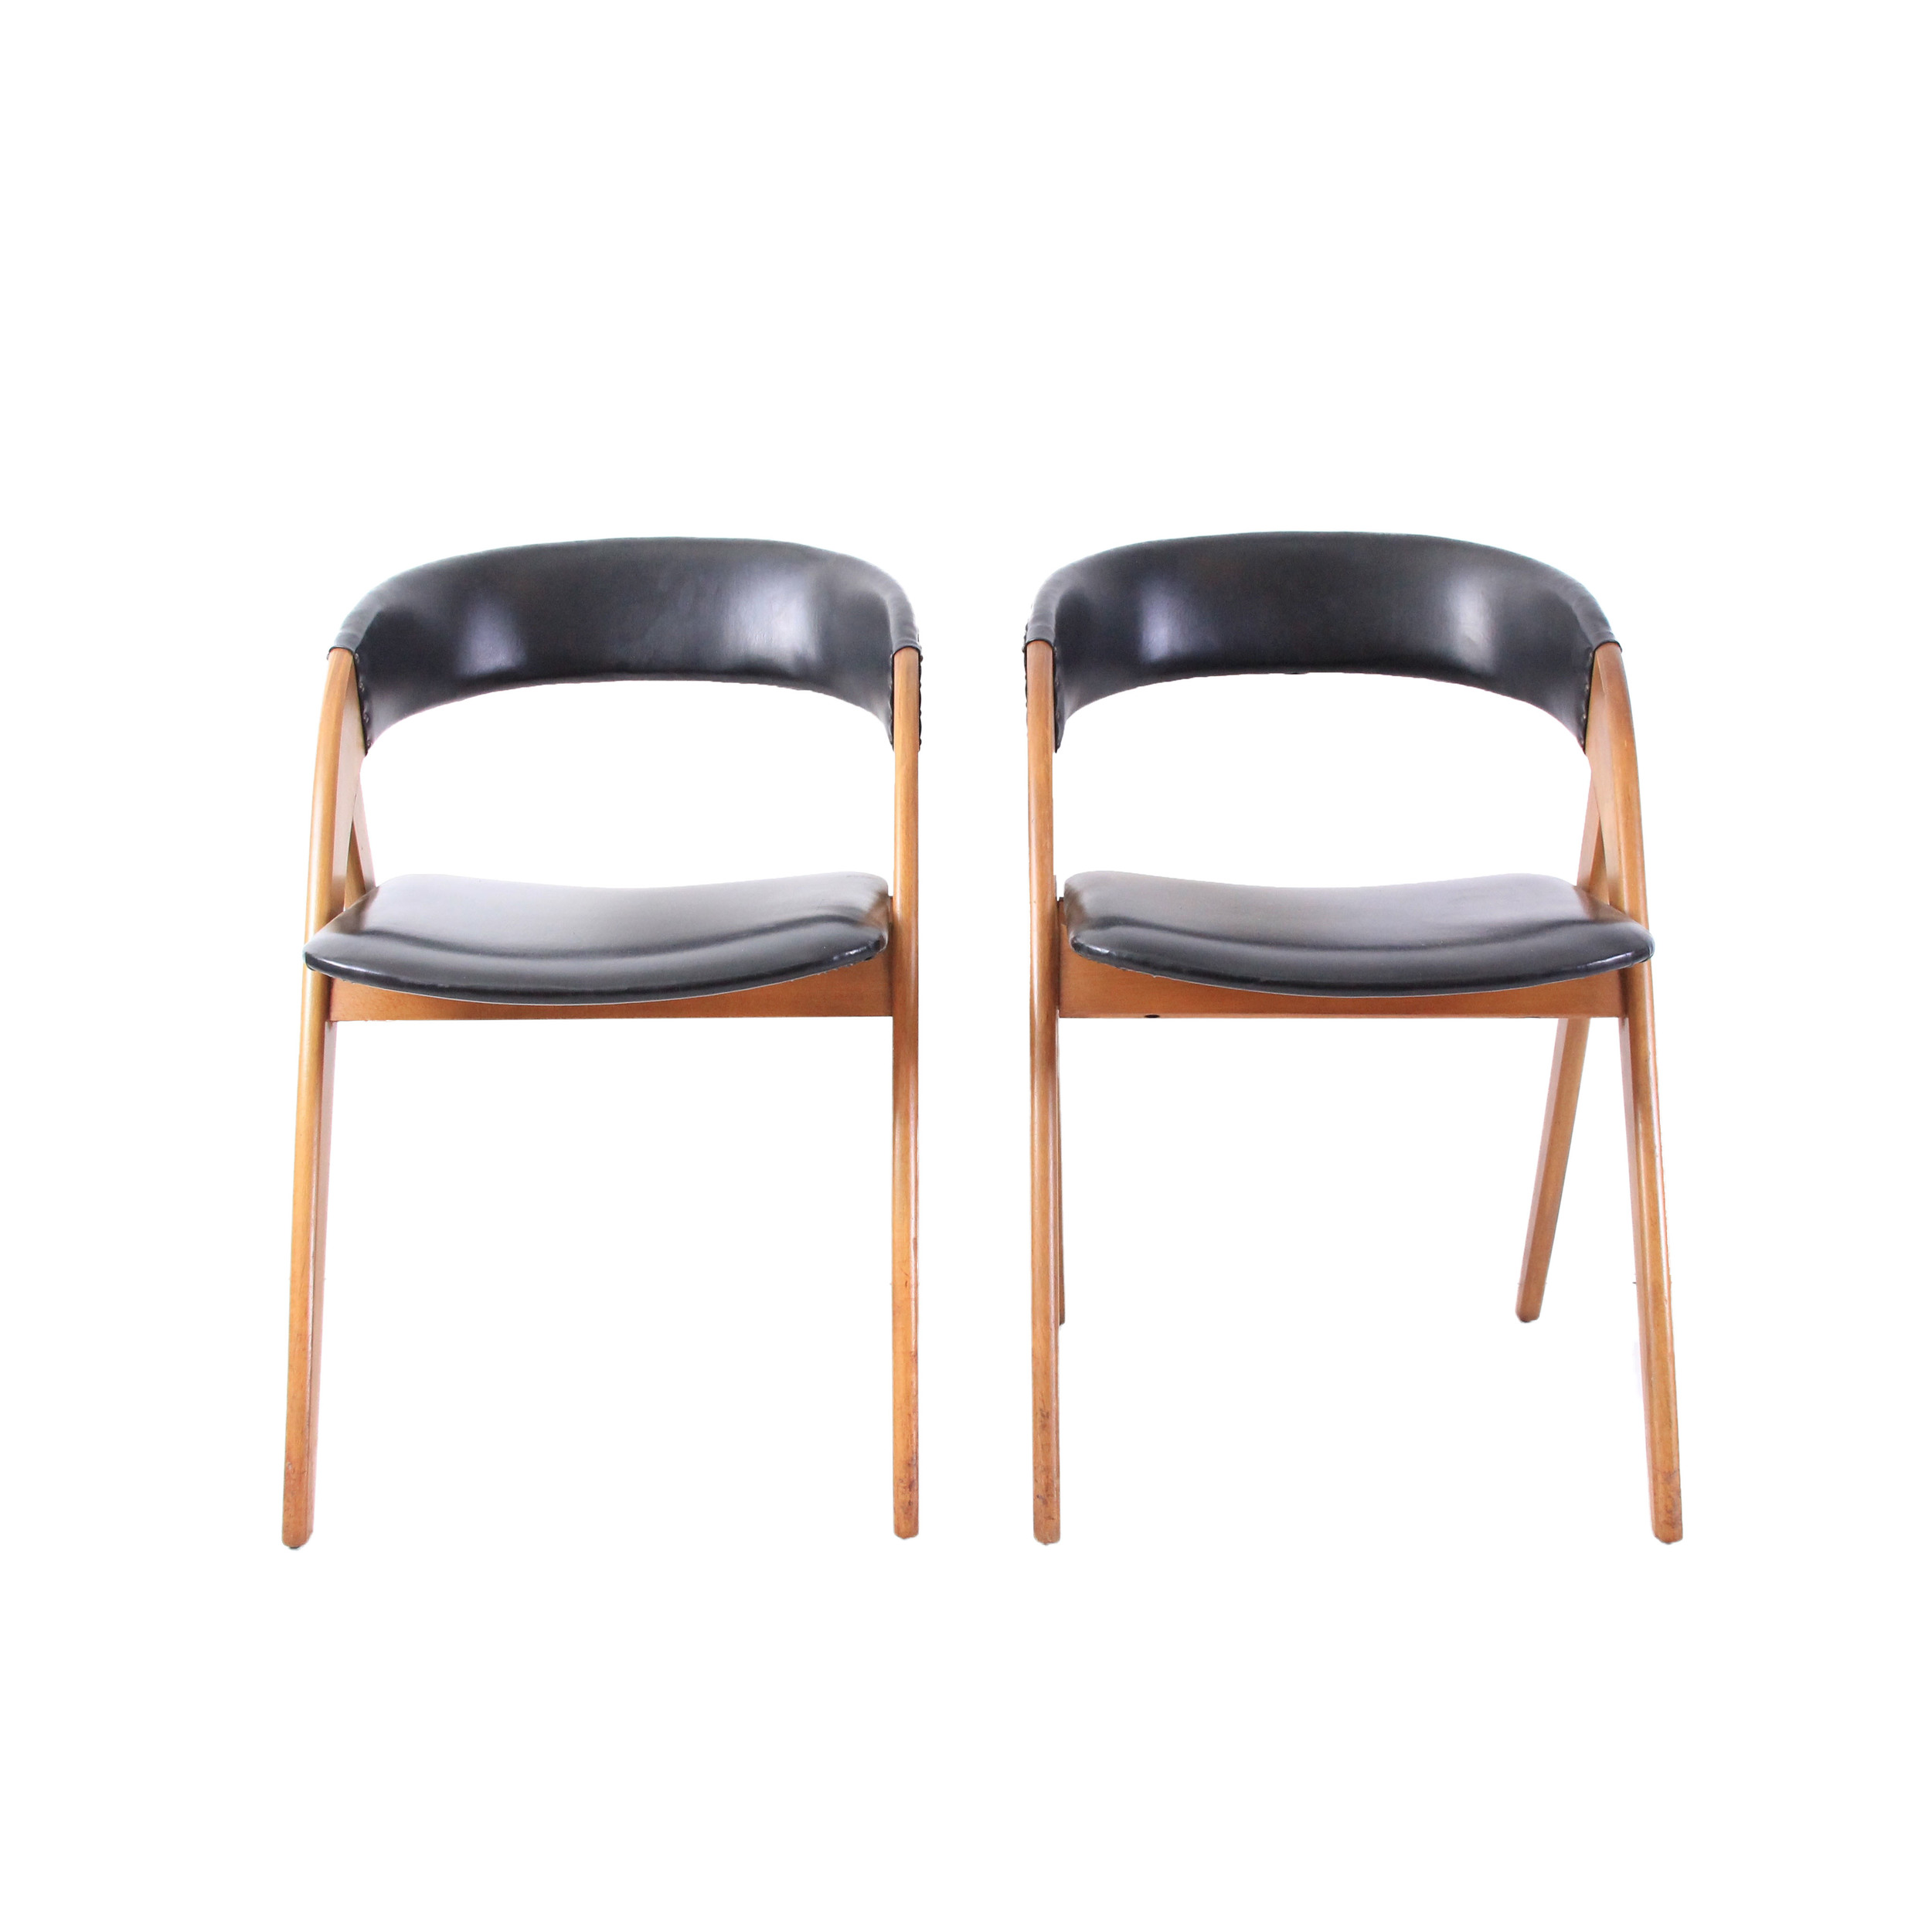 Vintage Mid Century Modern Danish Leather Chairs